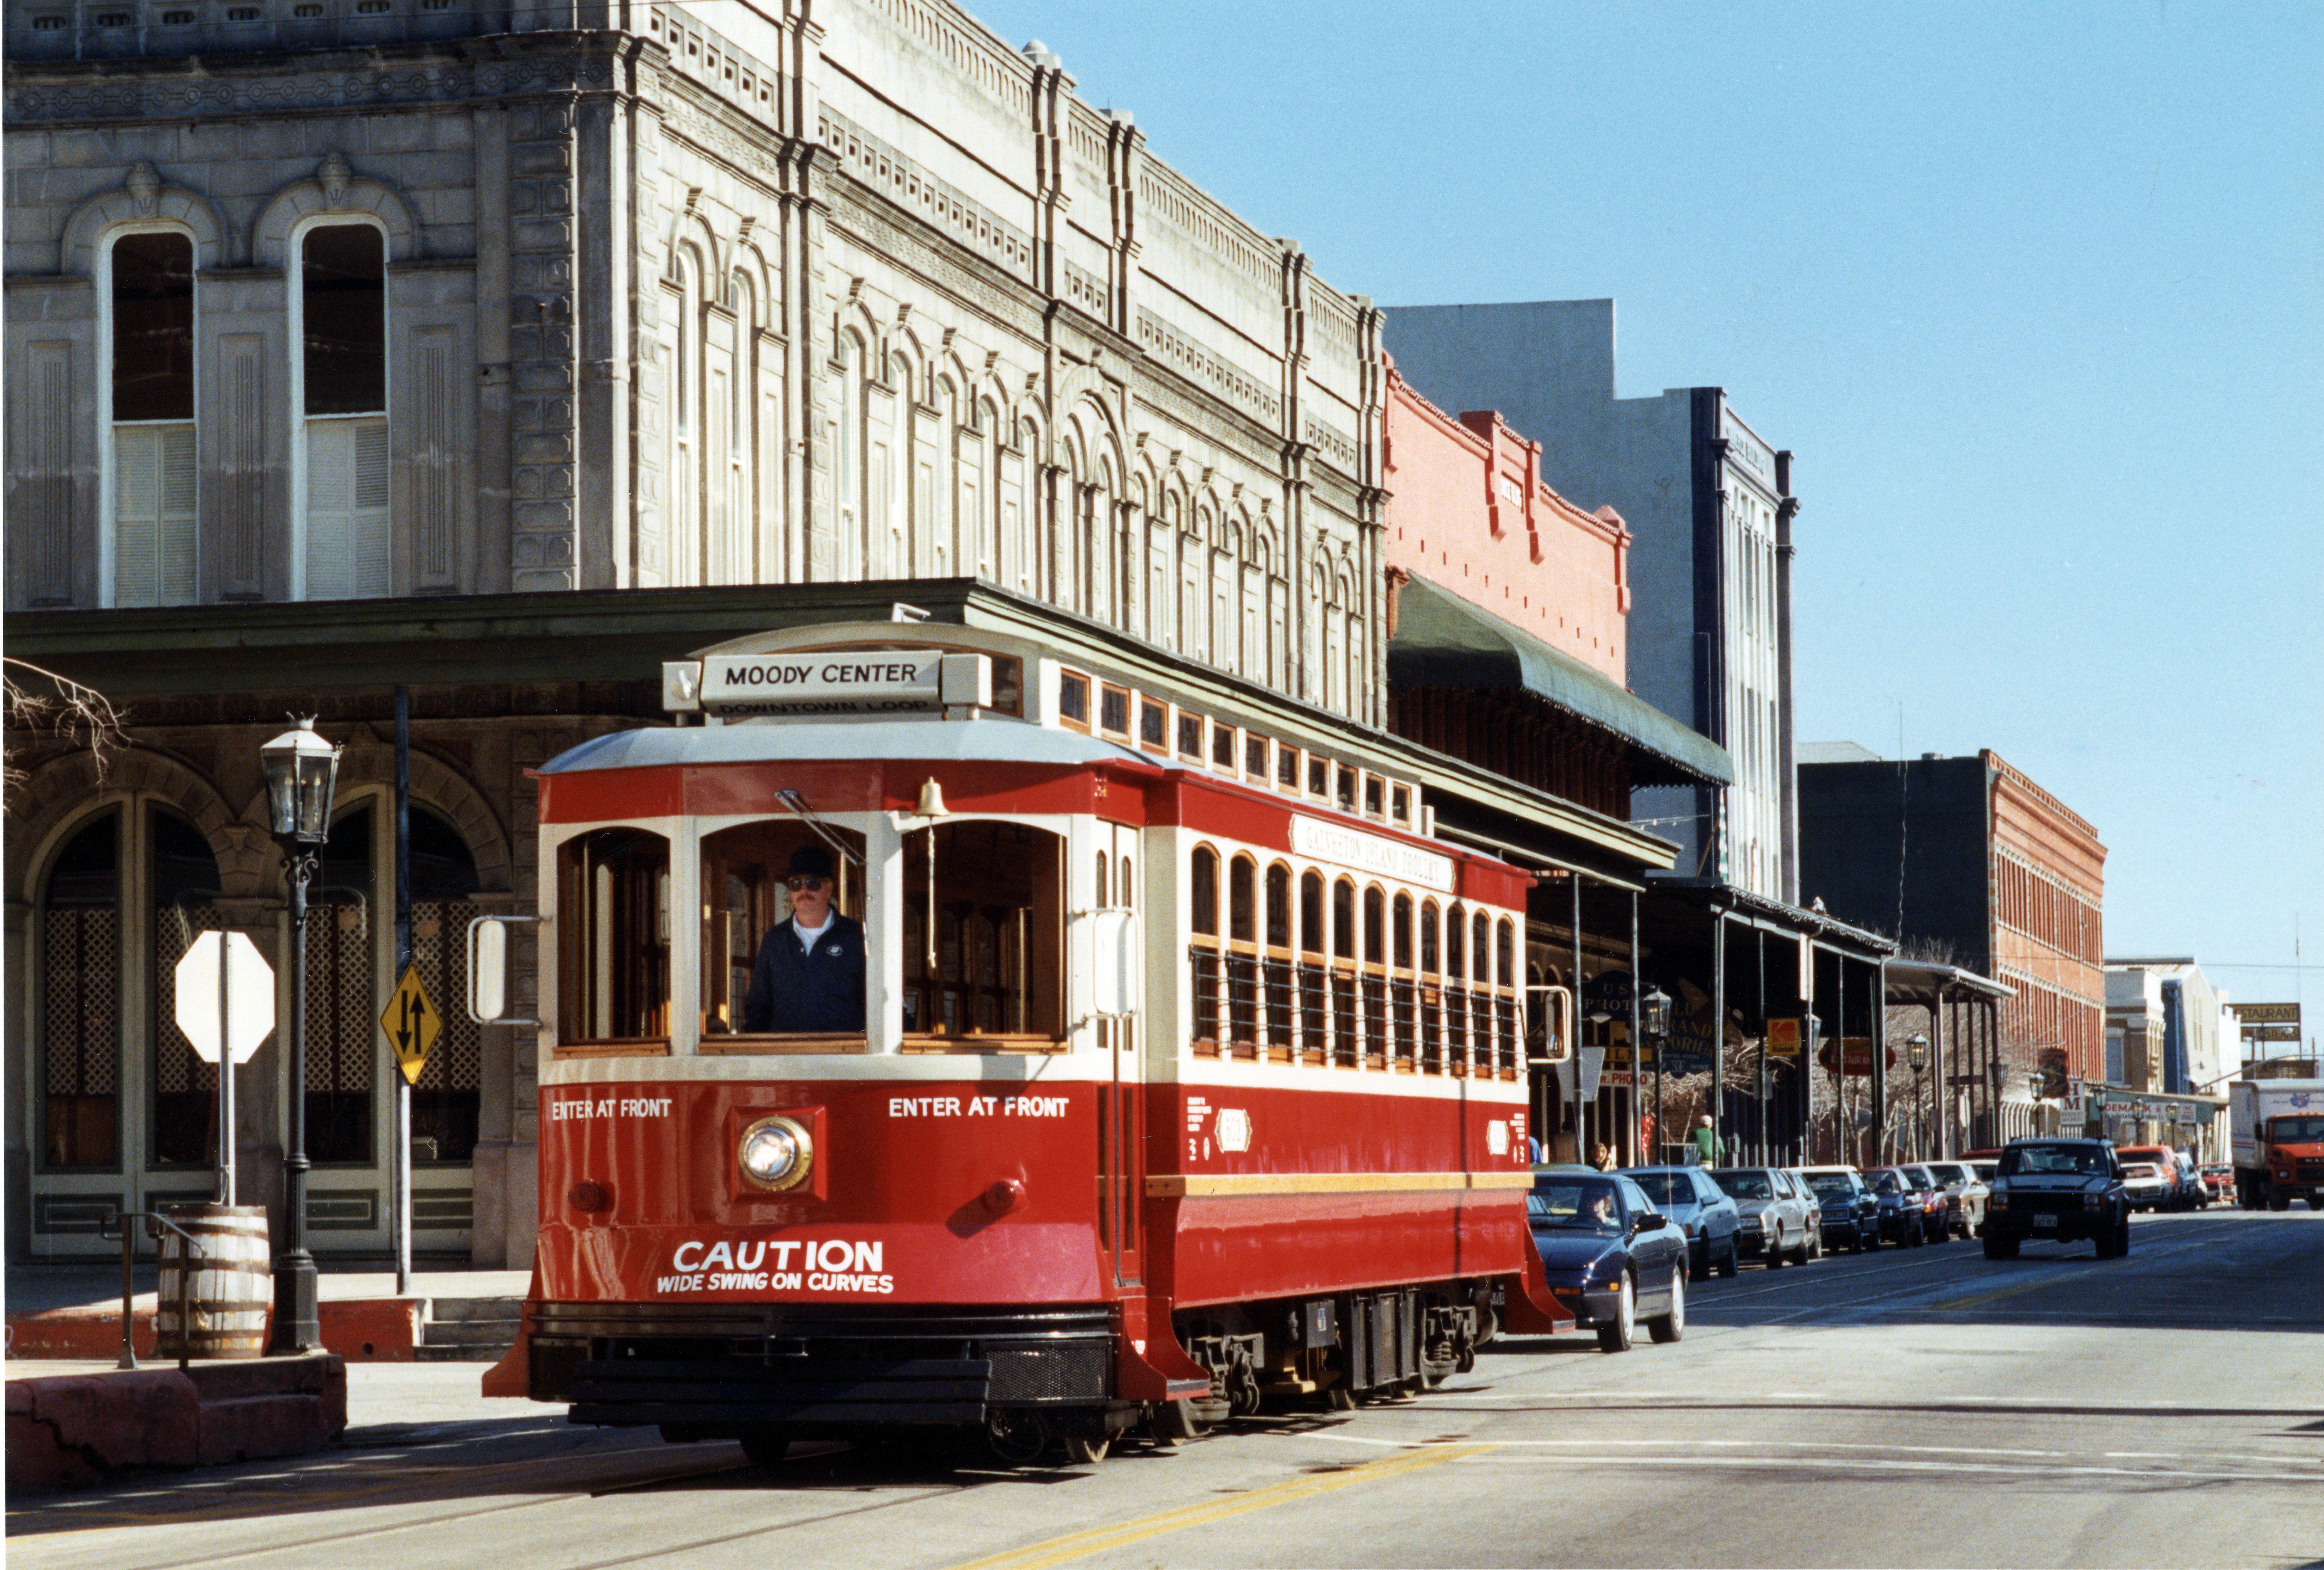 Trolleys may return to Galveston - Washington Times